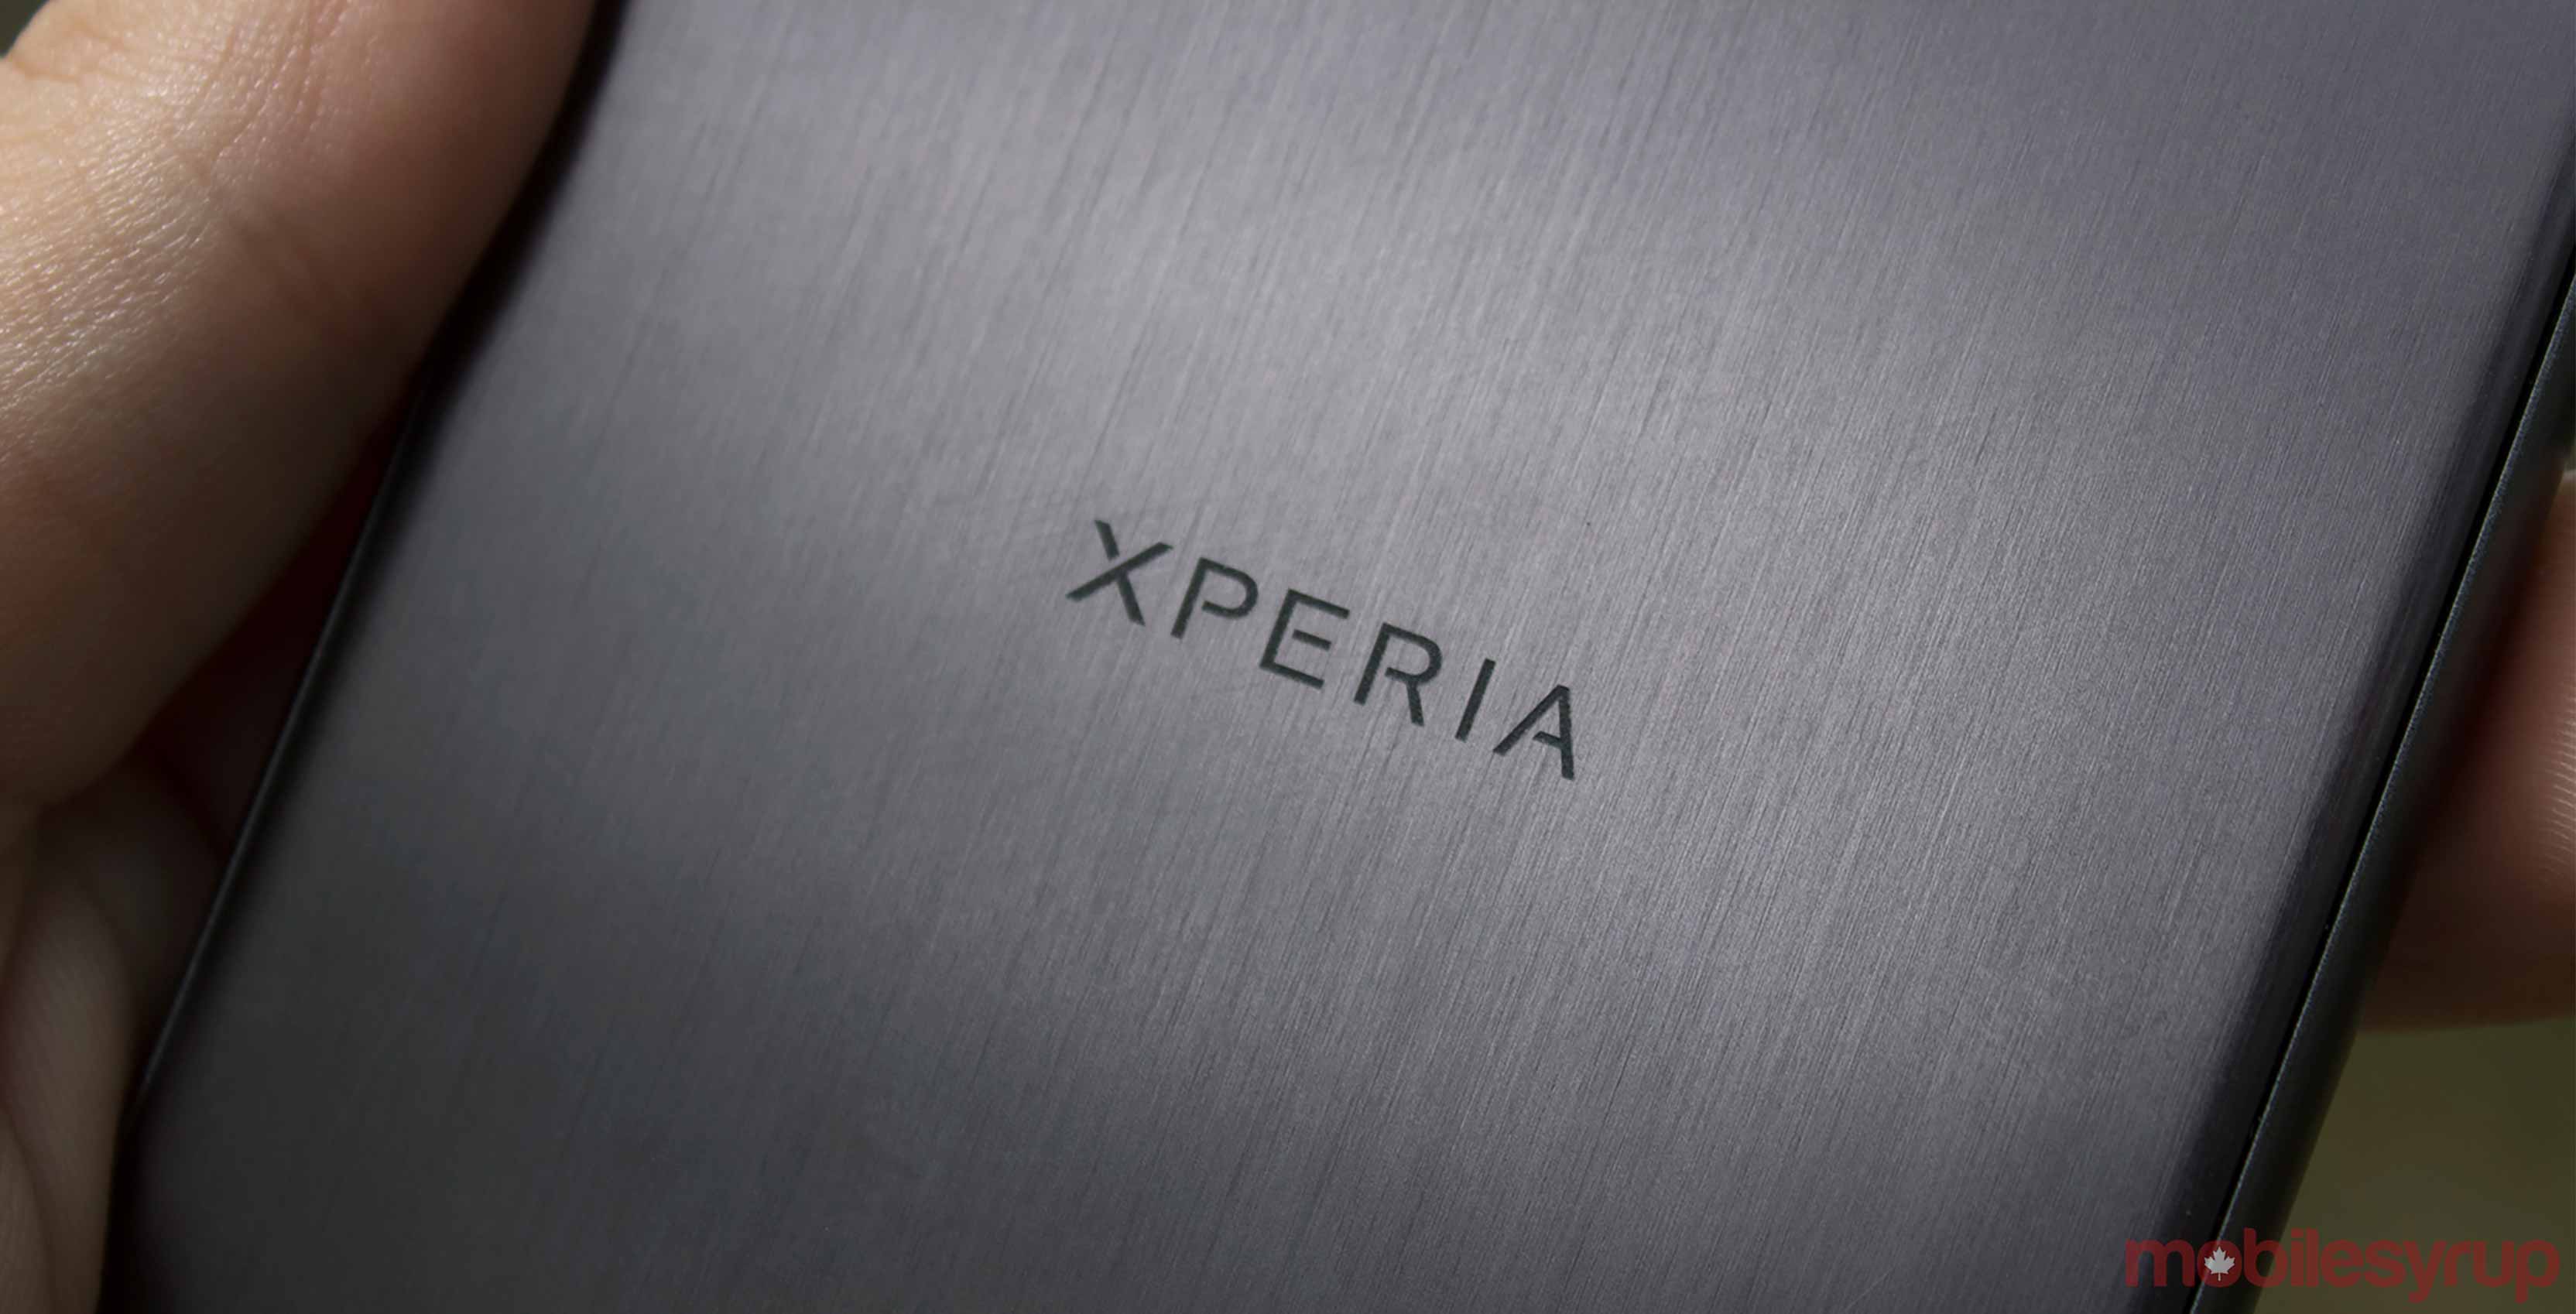 Rear of a Sony Xperia device